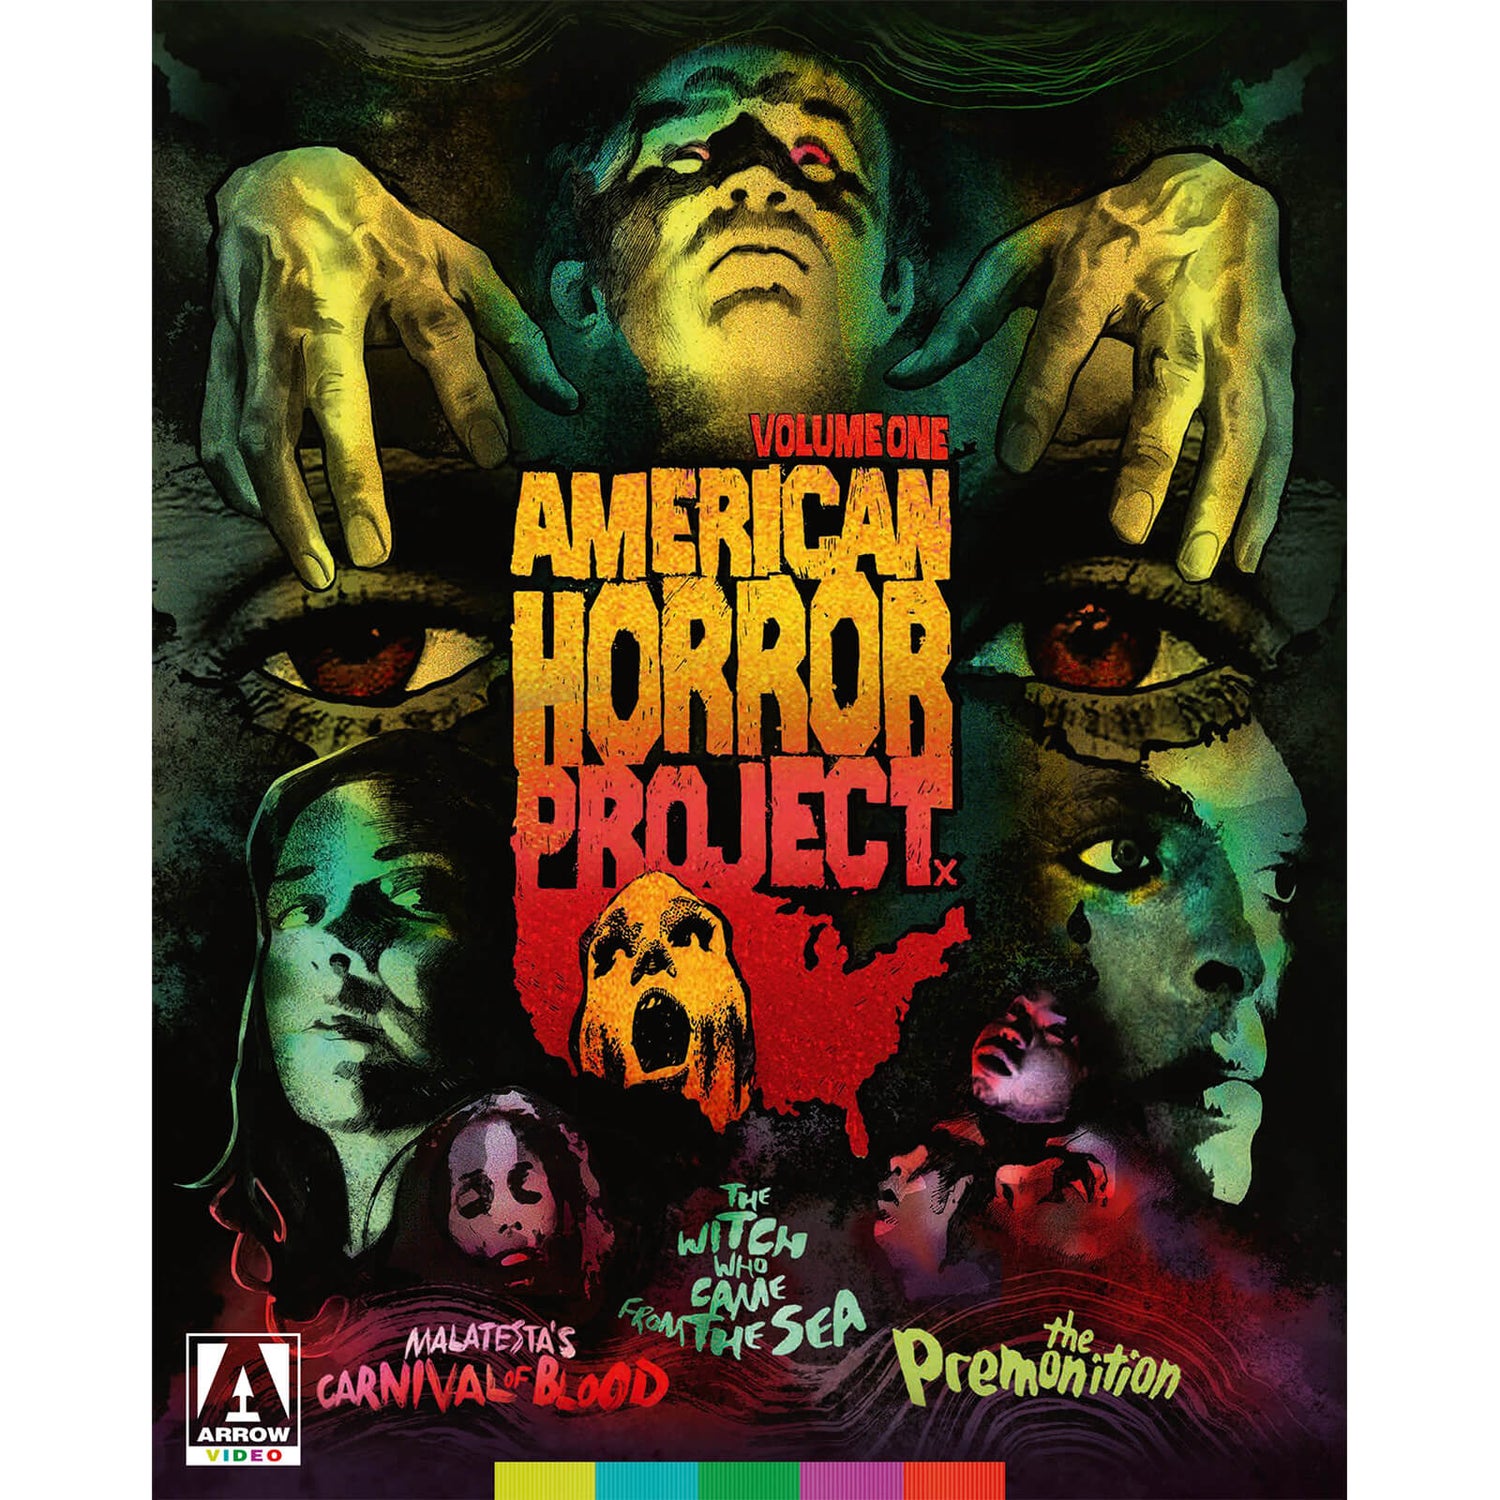 American Horror Project Vol. 1 Blu-ray